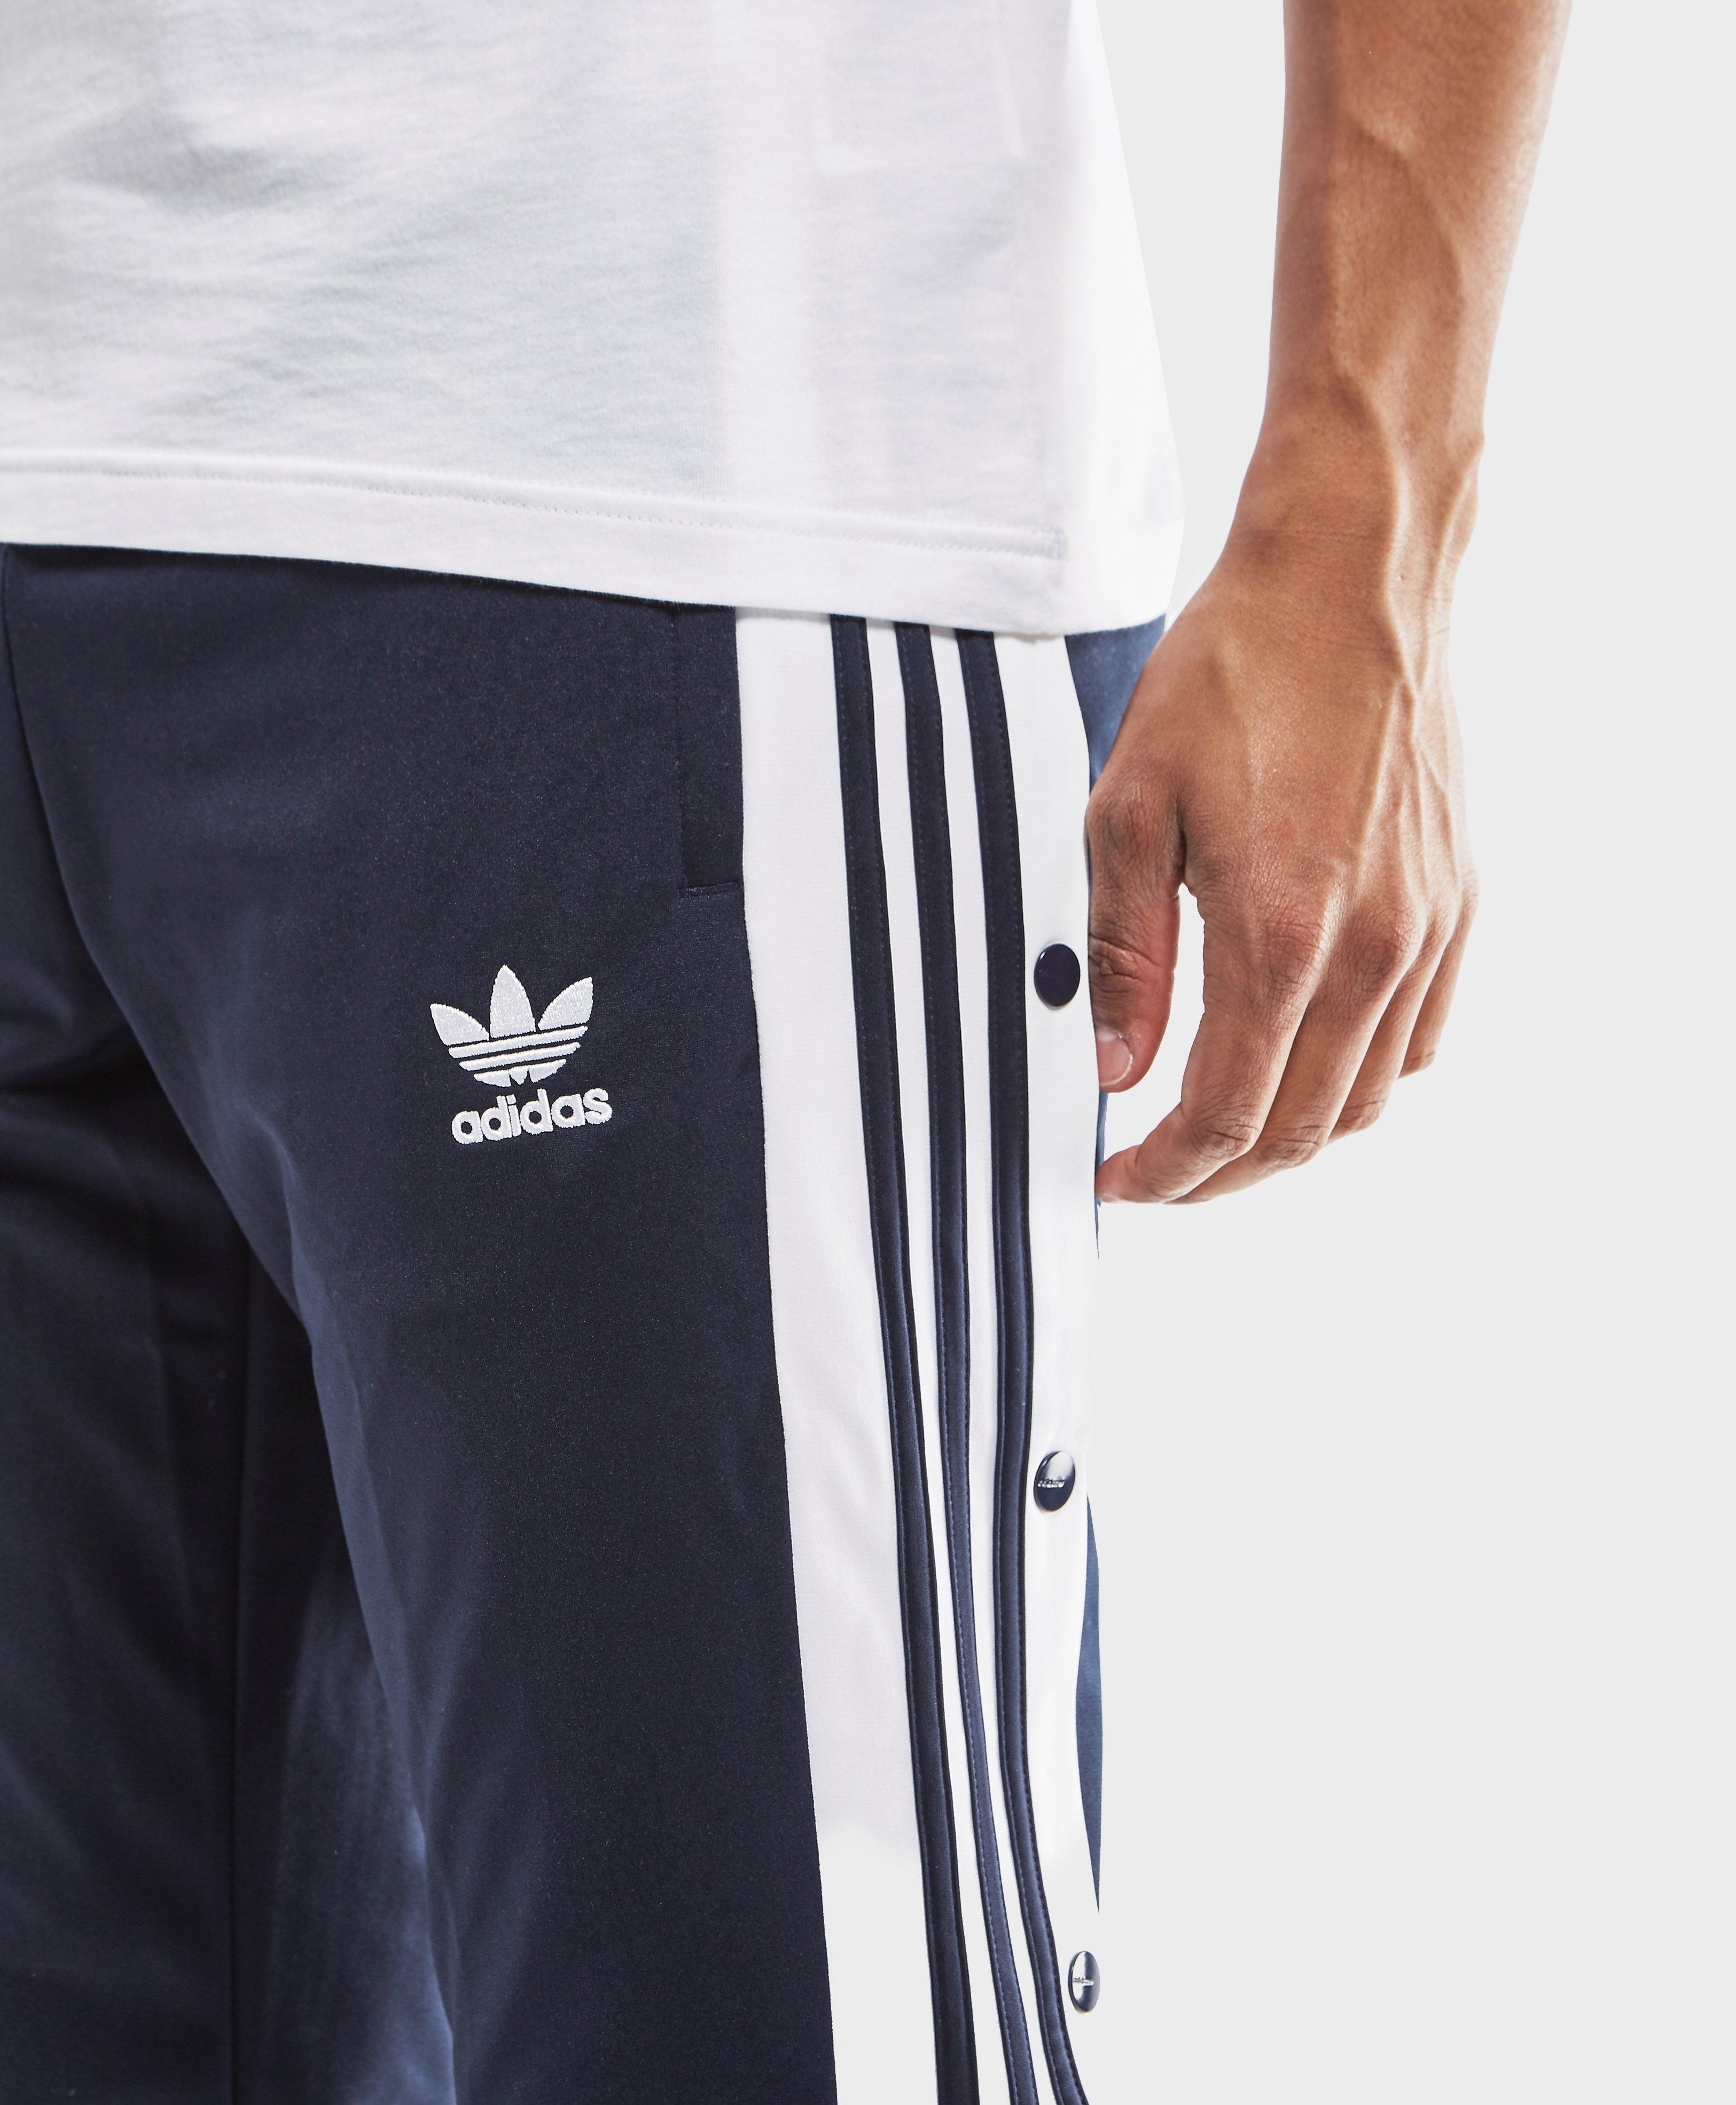 Lyst - Adidas Originals Adibreak Popper Track Pants in Blue for Men